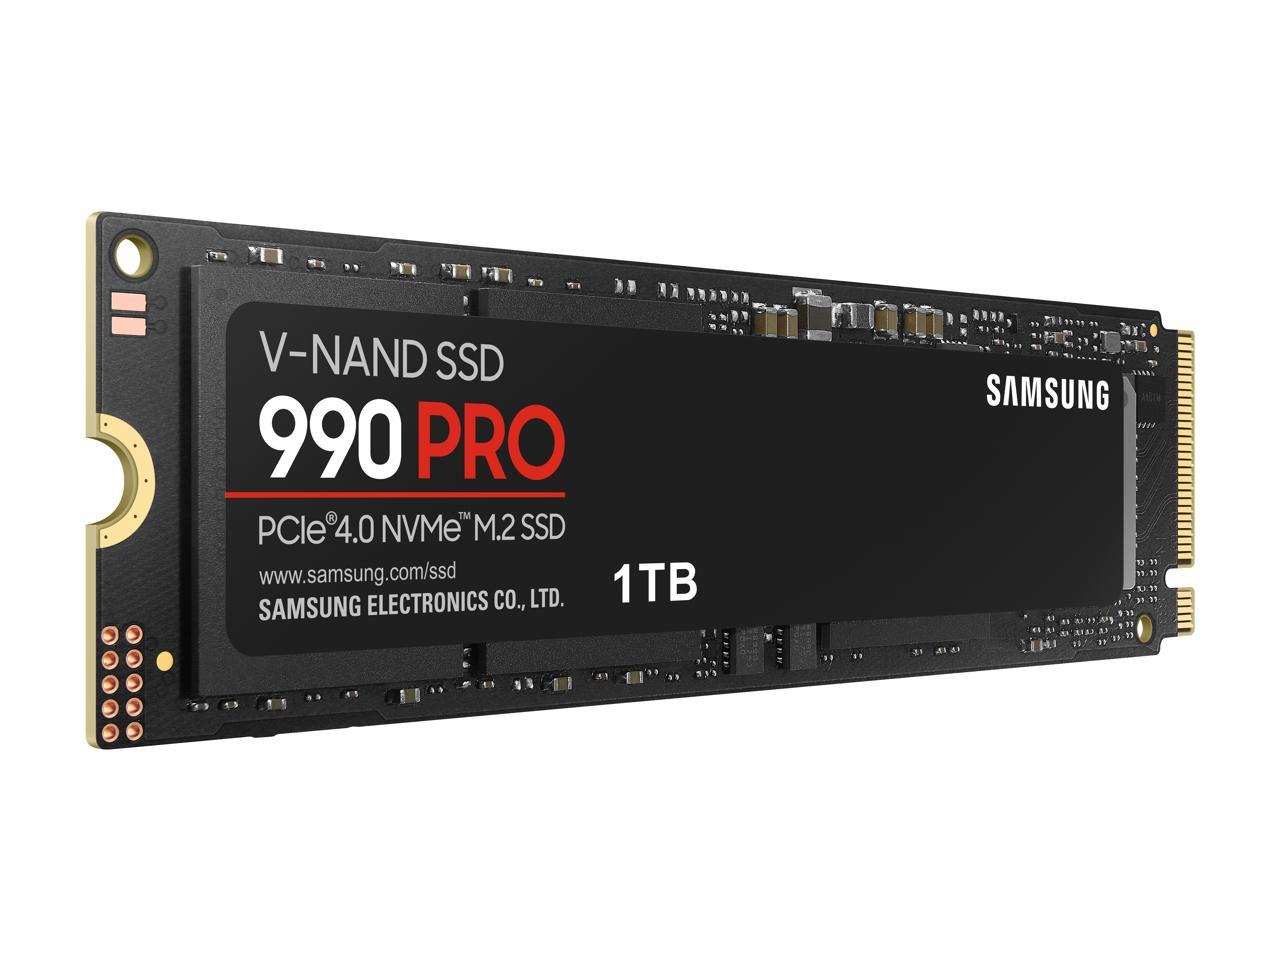 SAMSUNG SSD 990 PRO 1TB M.2 2280 MZ-V9P1T0B/AM at Newegg $110